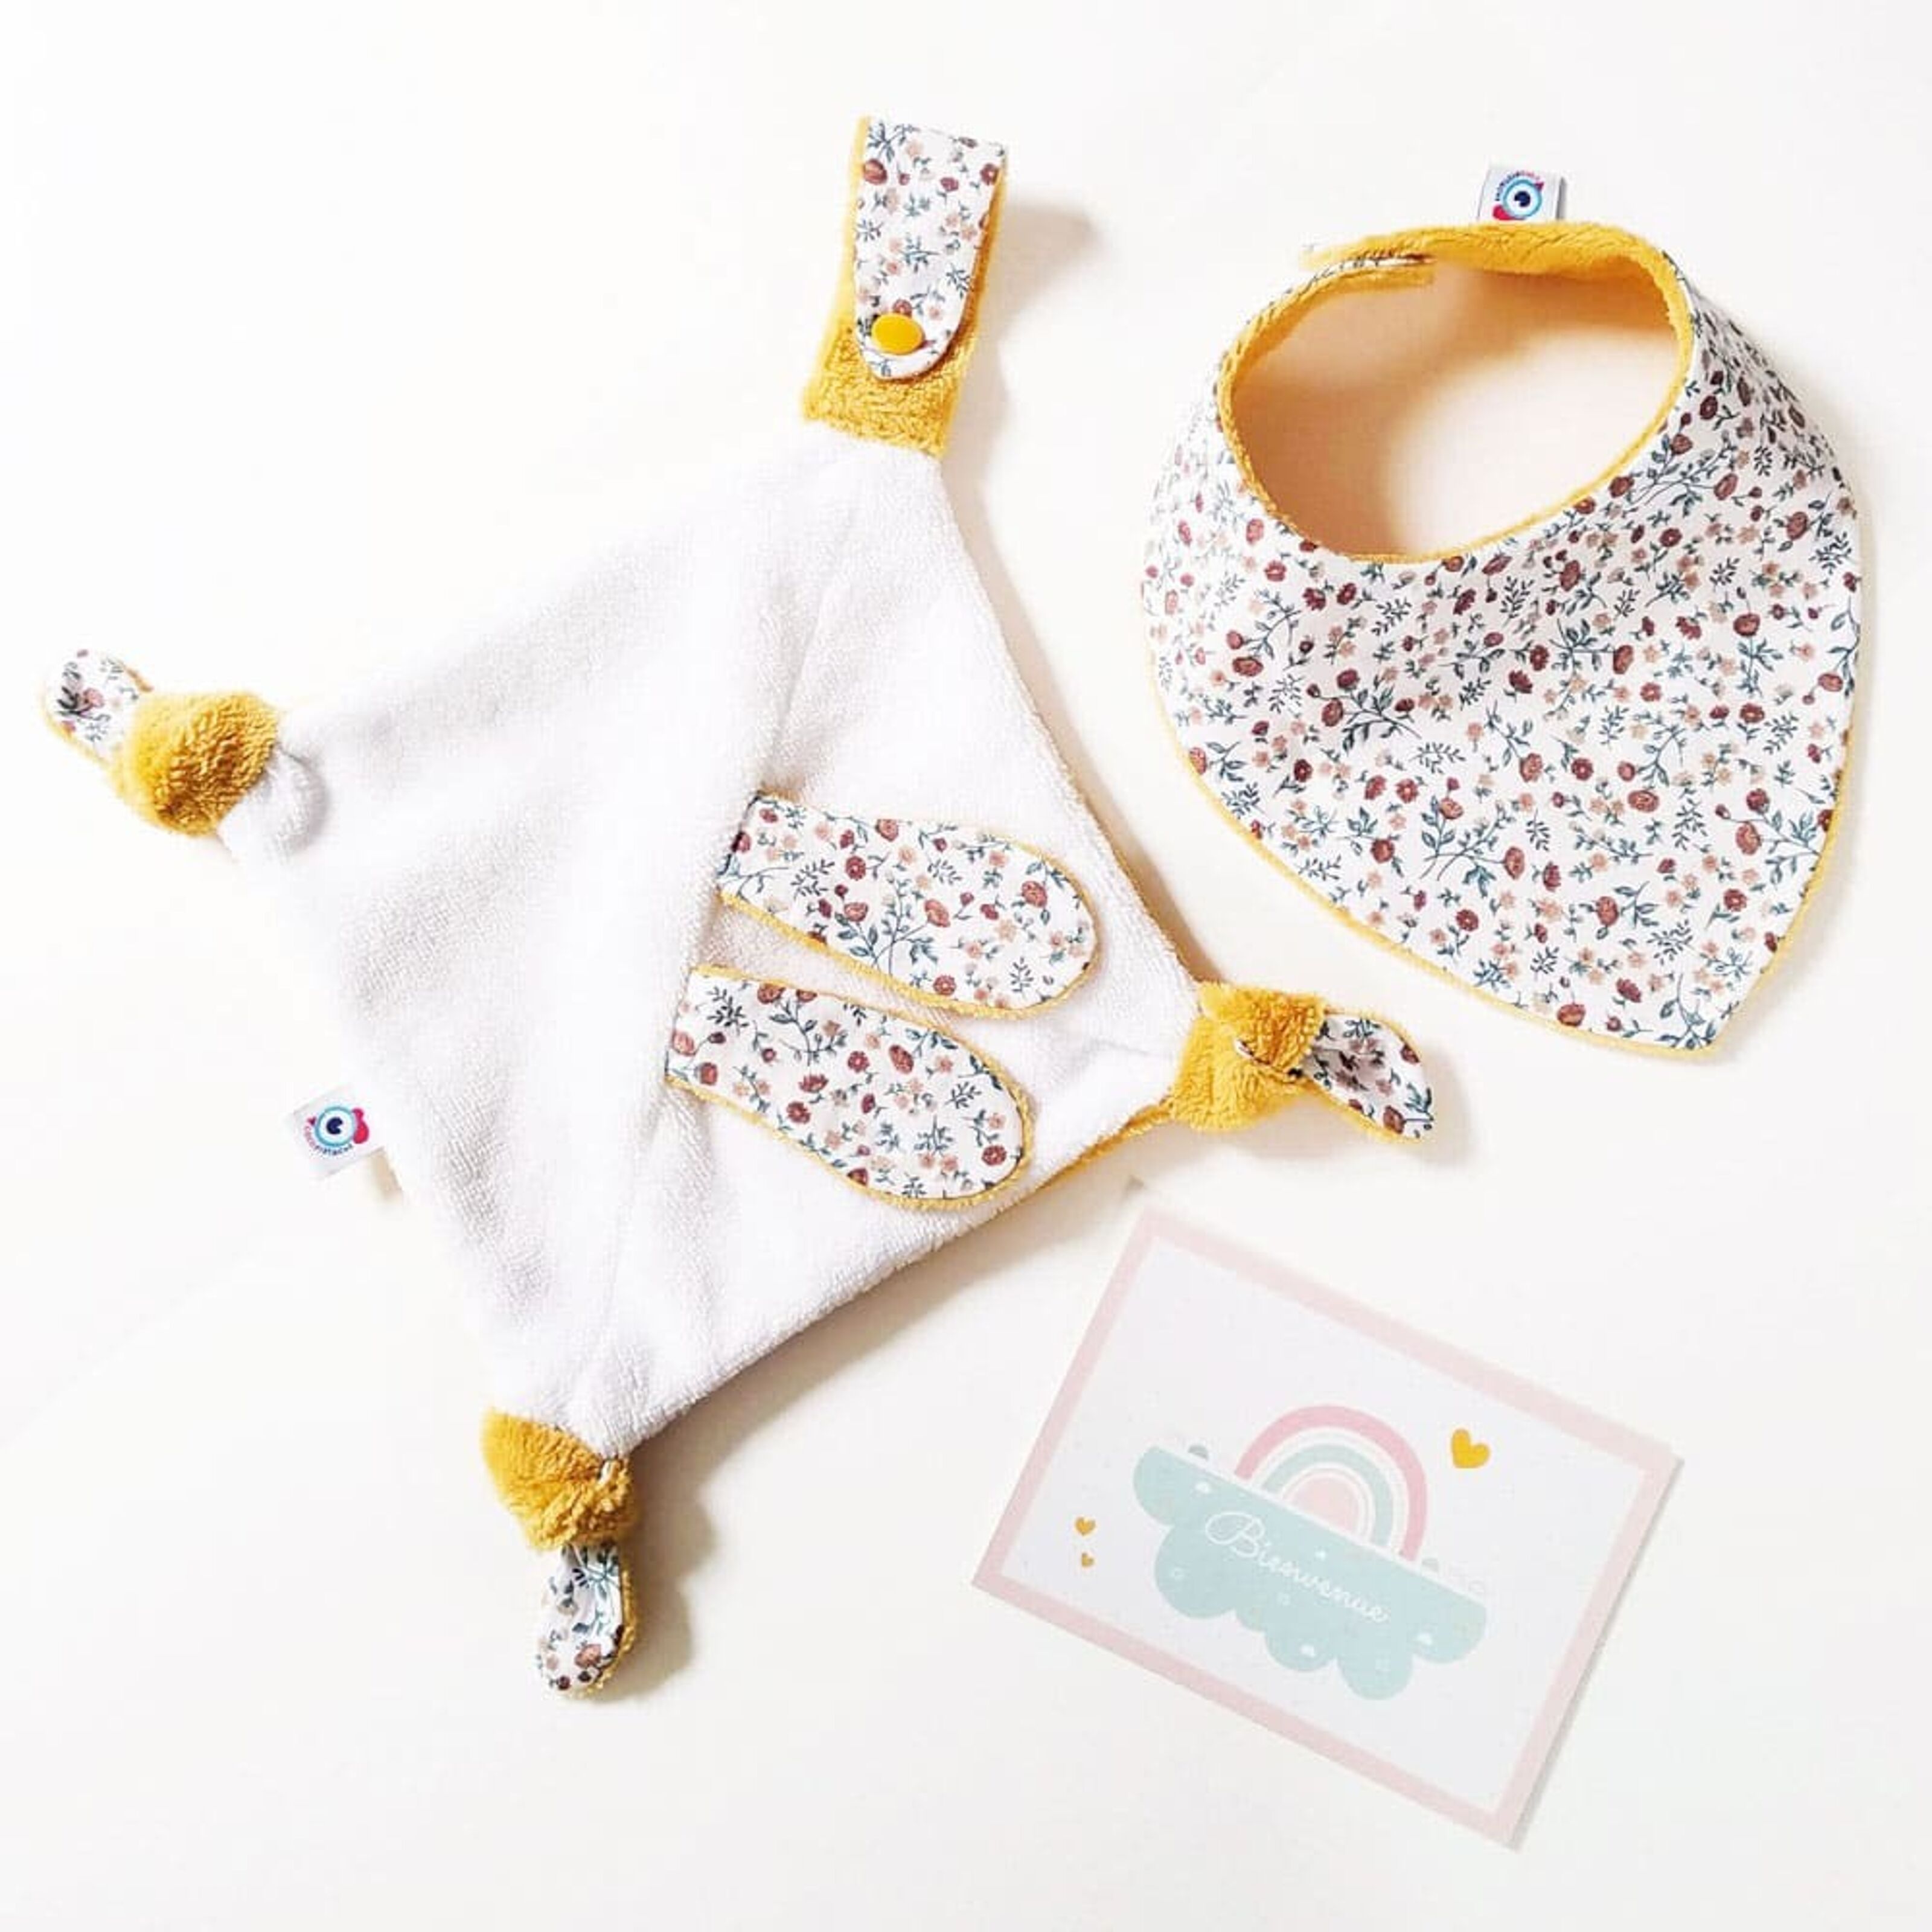 Buy wholesale BIRTH GIFT for €29 Bib comforter birth Rabbit / + 1 + pack 1 flat boy mustard girl card flowers baby